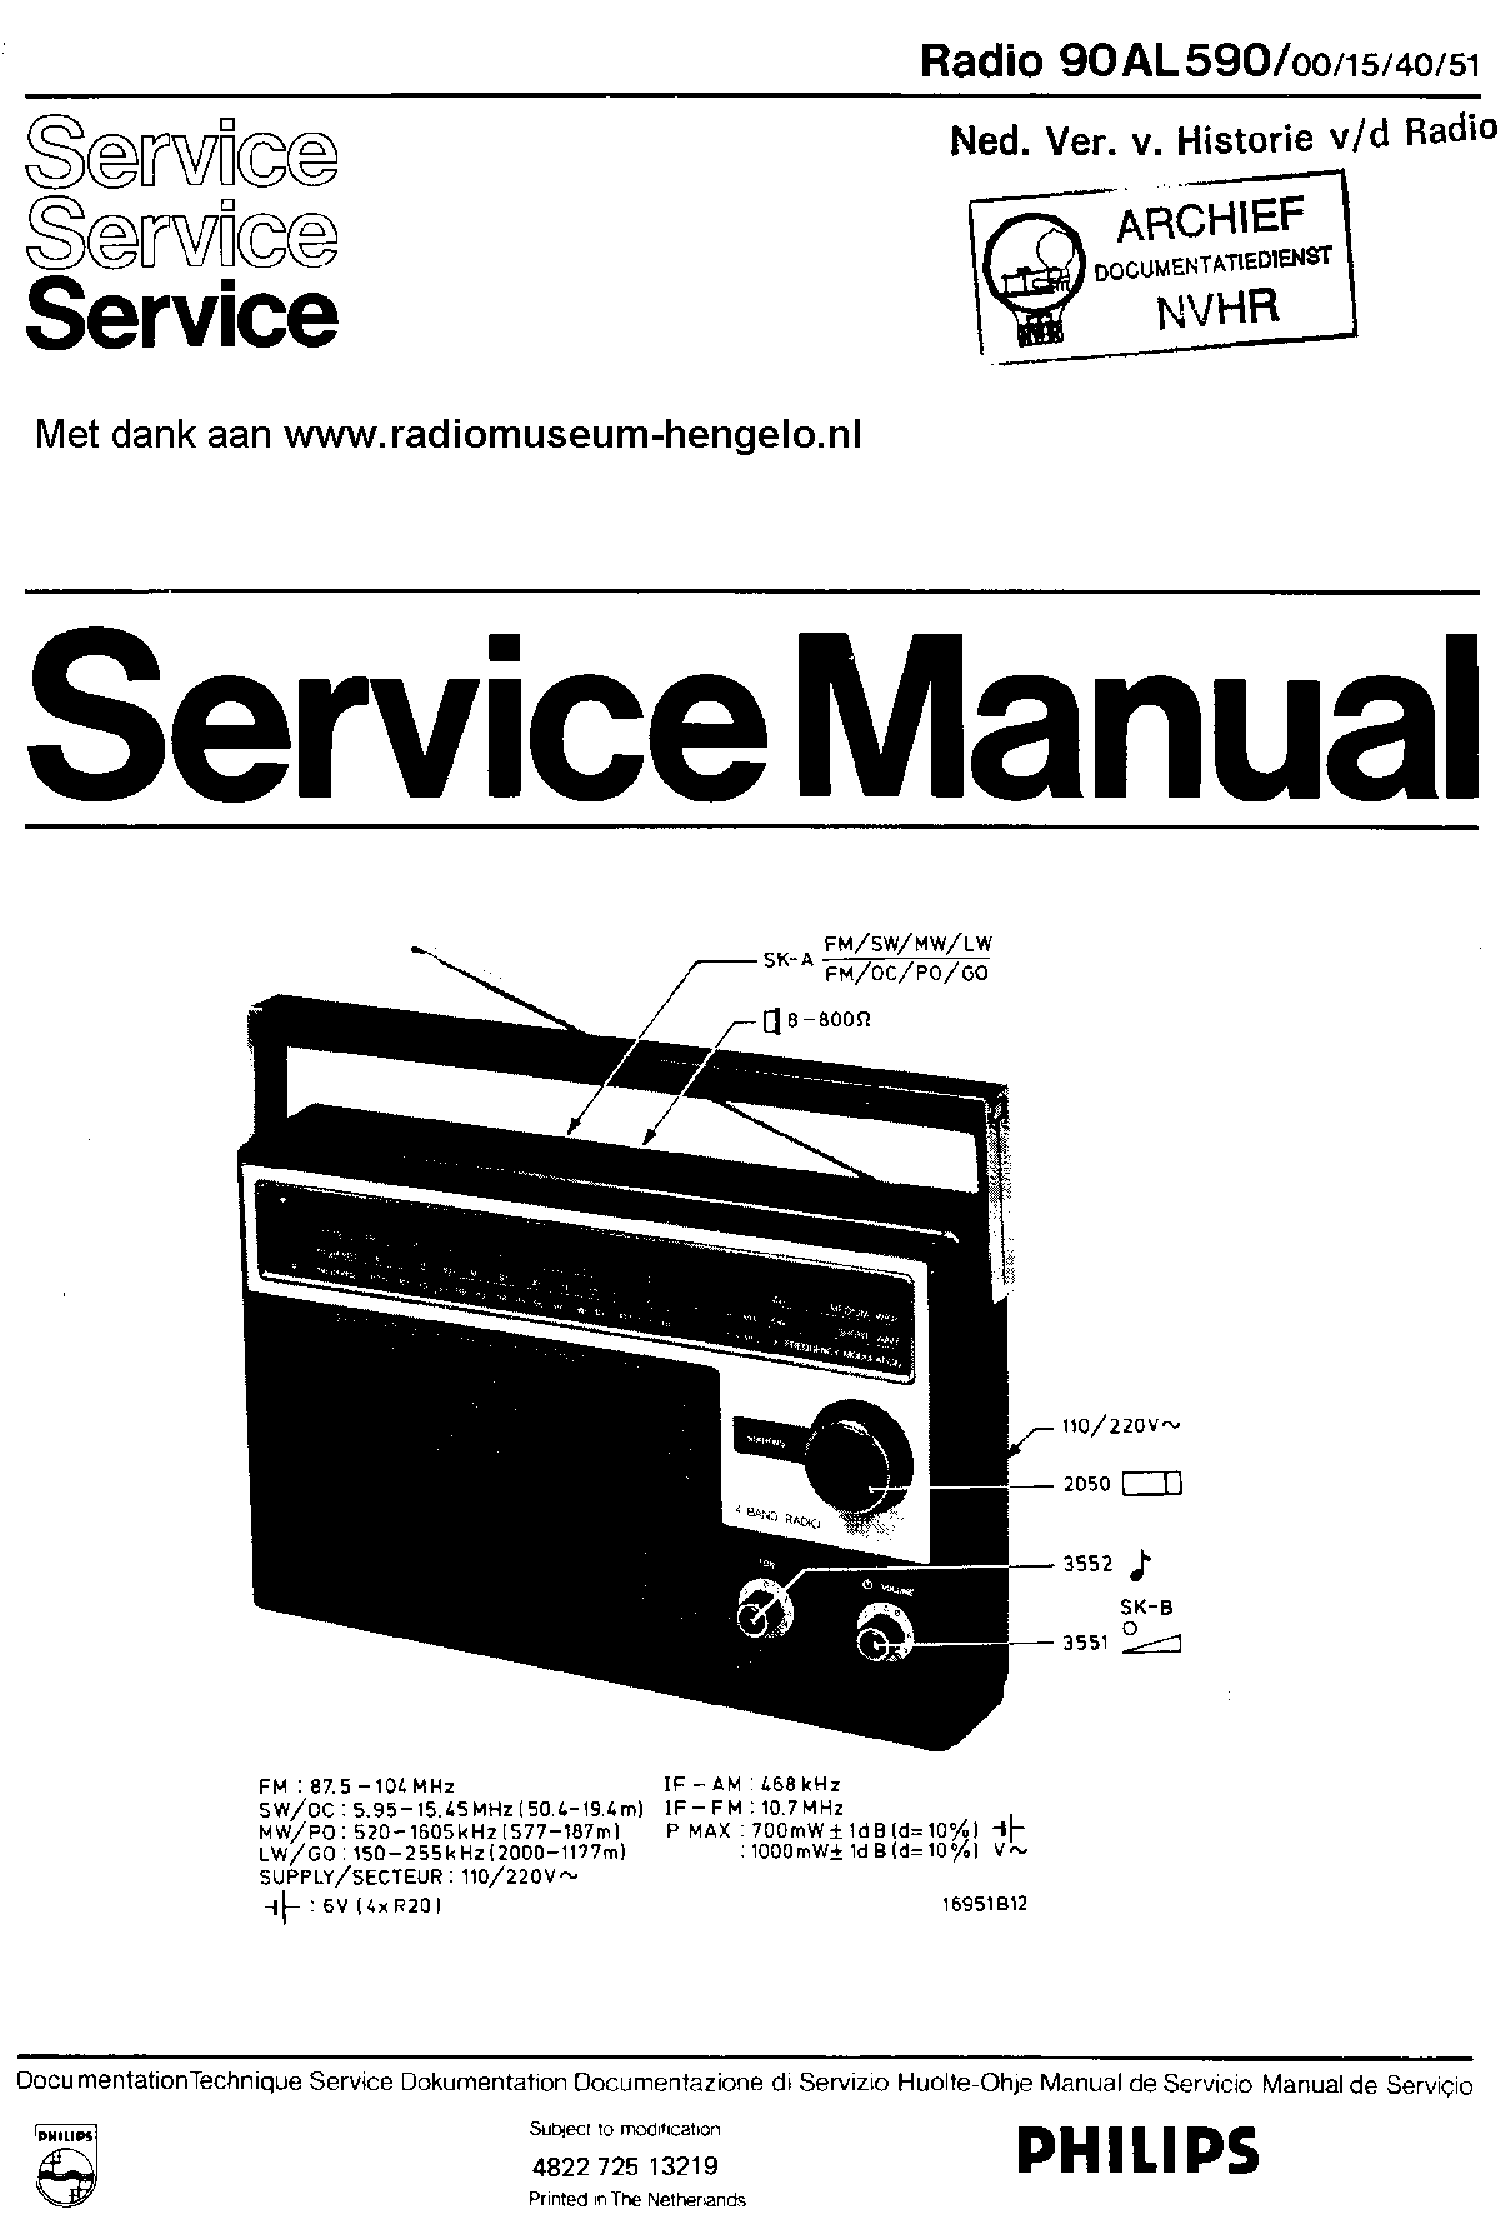 PHILIPS 90AL590-00-15-40-51 PORTABLE RECEIVER SM service manual (1st page)